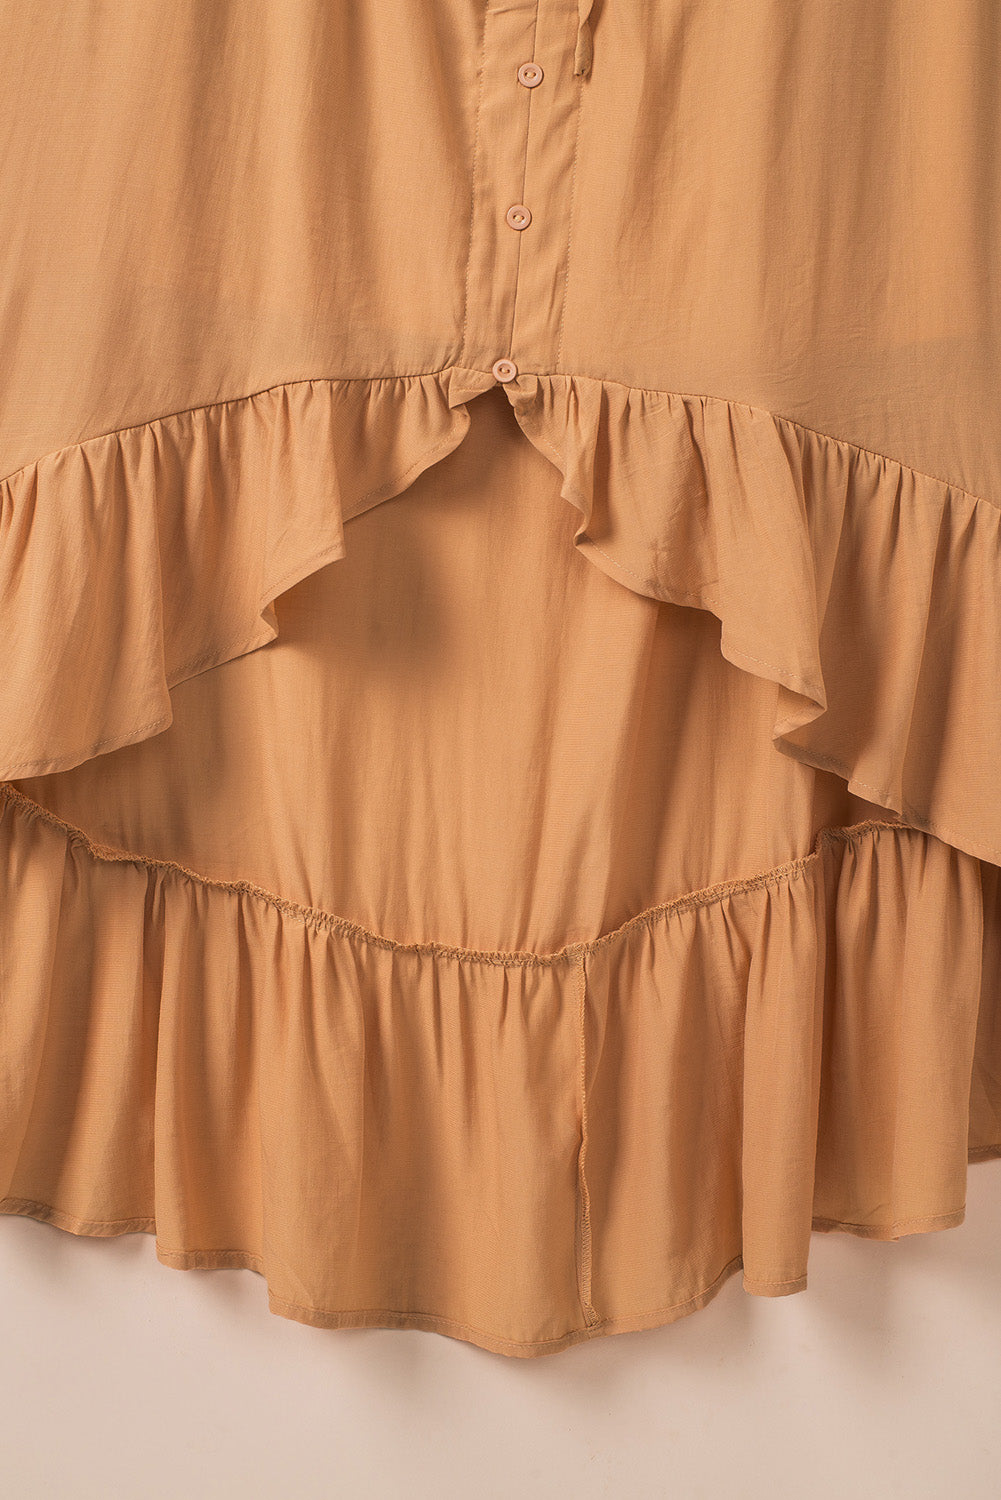 Apricot Glaze High Low Off The Shoulder Maxi Dress